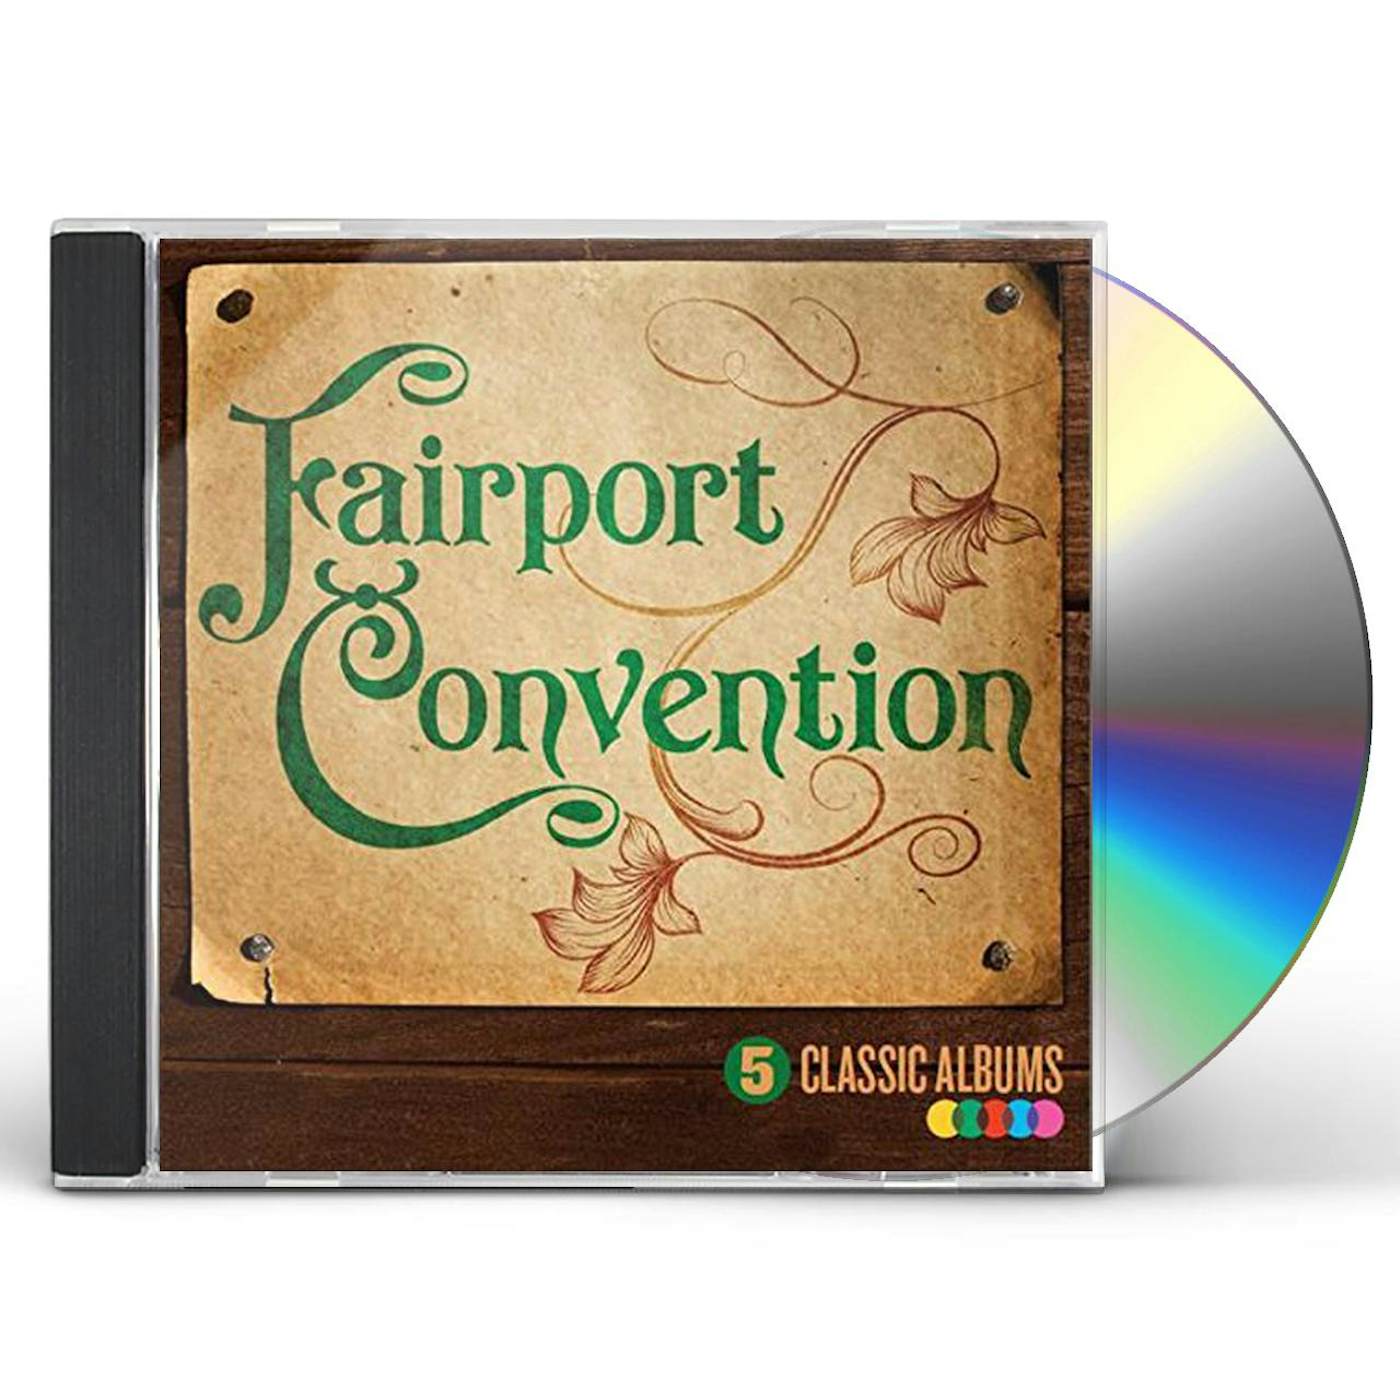 Fairport Convention 5 CLASSIC ALBUMS CD